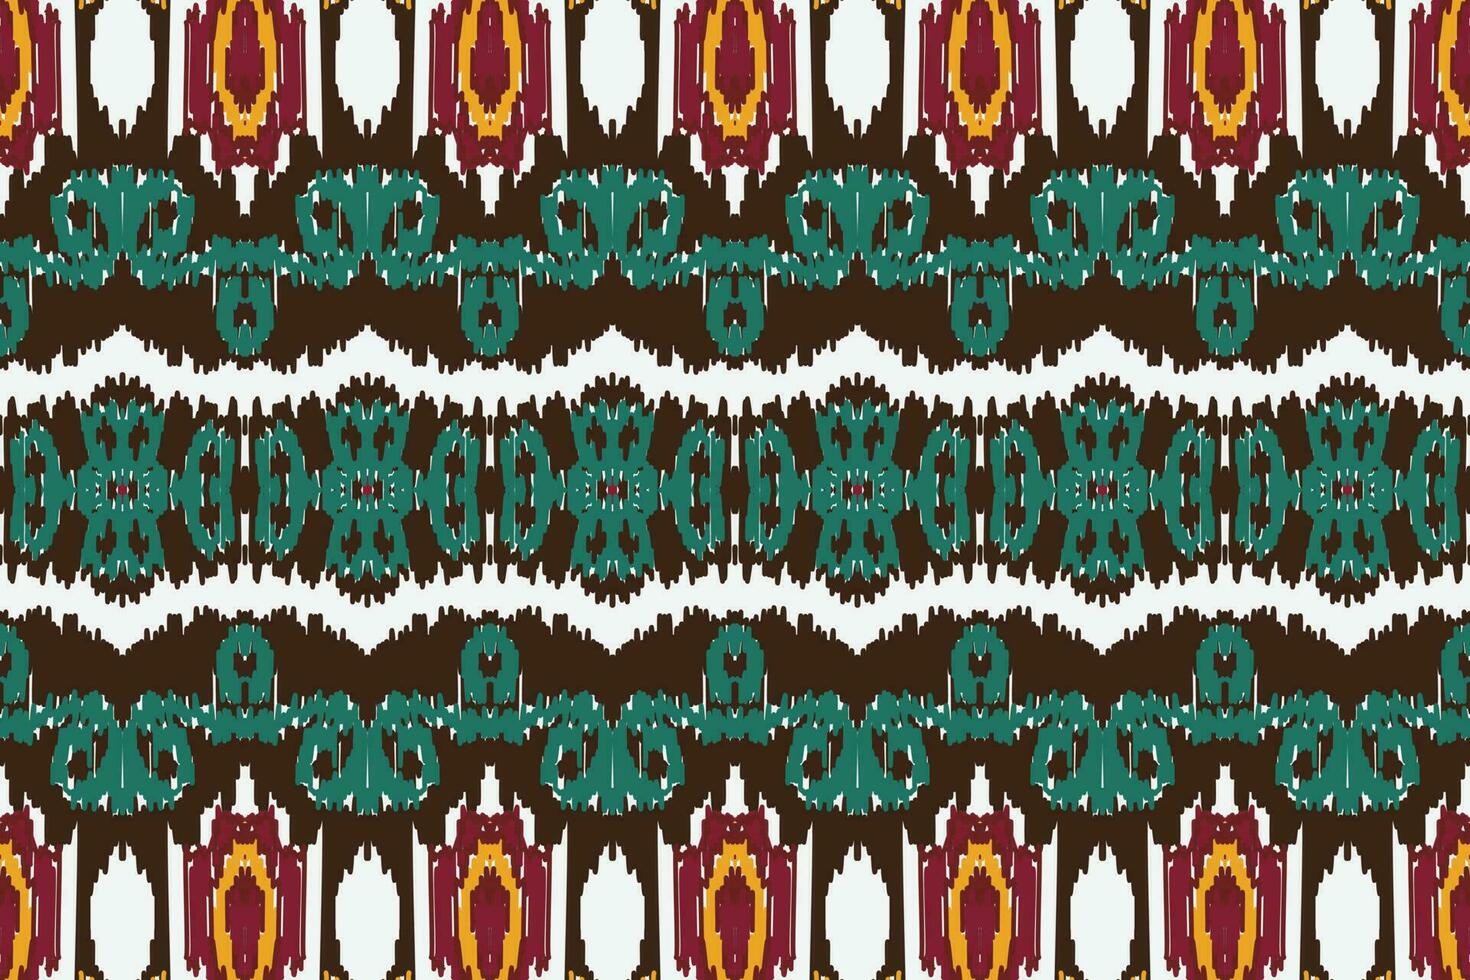 africano ikat cachemir modelo bordado antecedentes. geométrico étnico oriental modelo tradicional. ikat azteca estilo resumen vector ilustración. diseño para impresión textura,tela,sari,sari,alfombra.